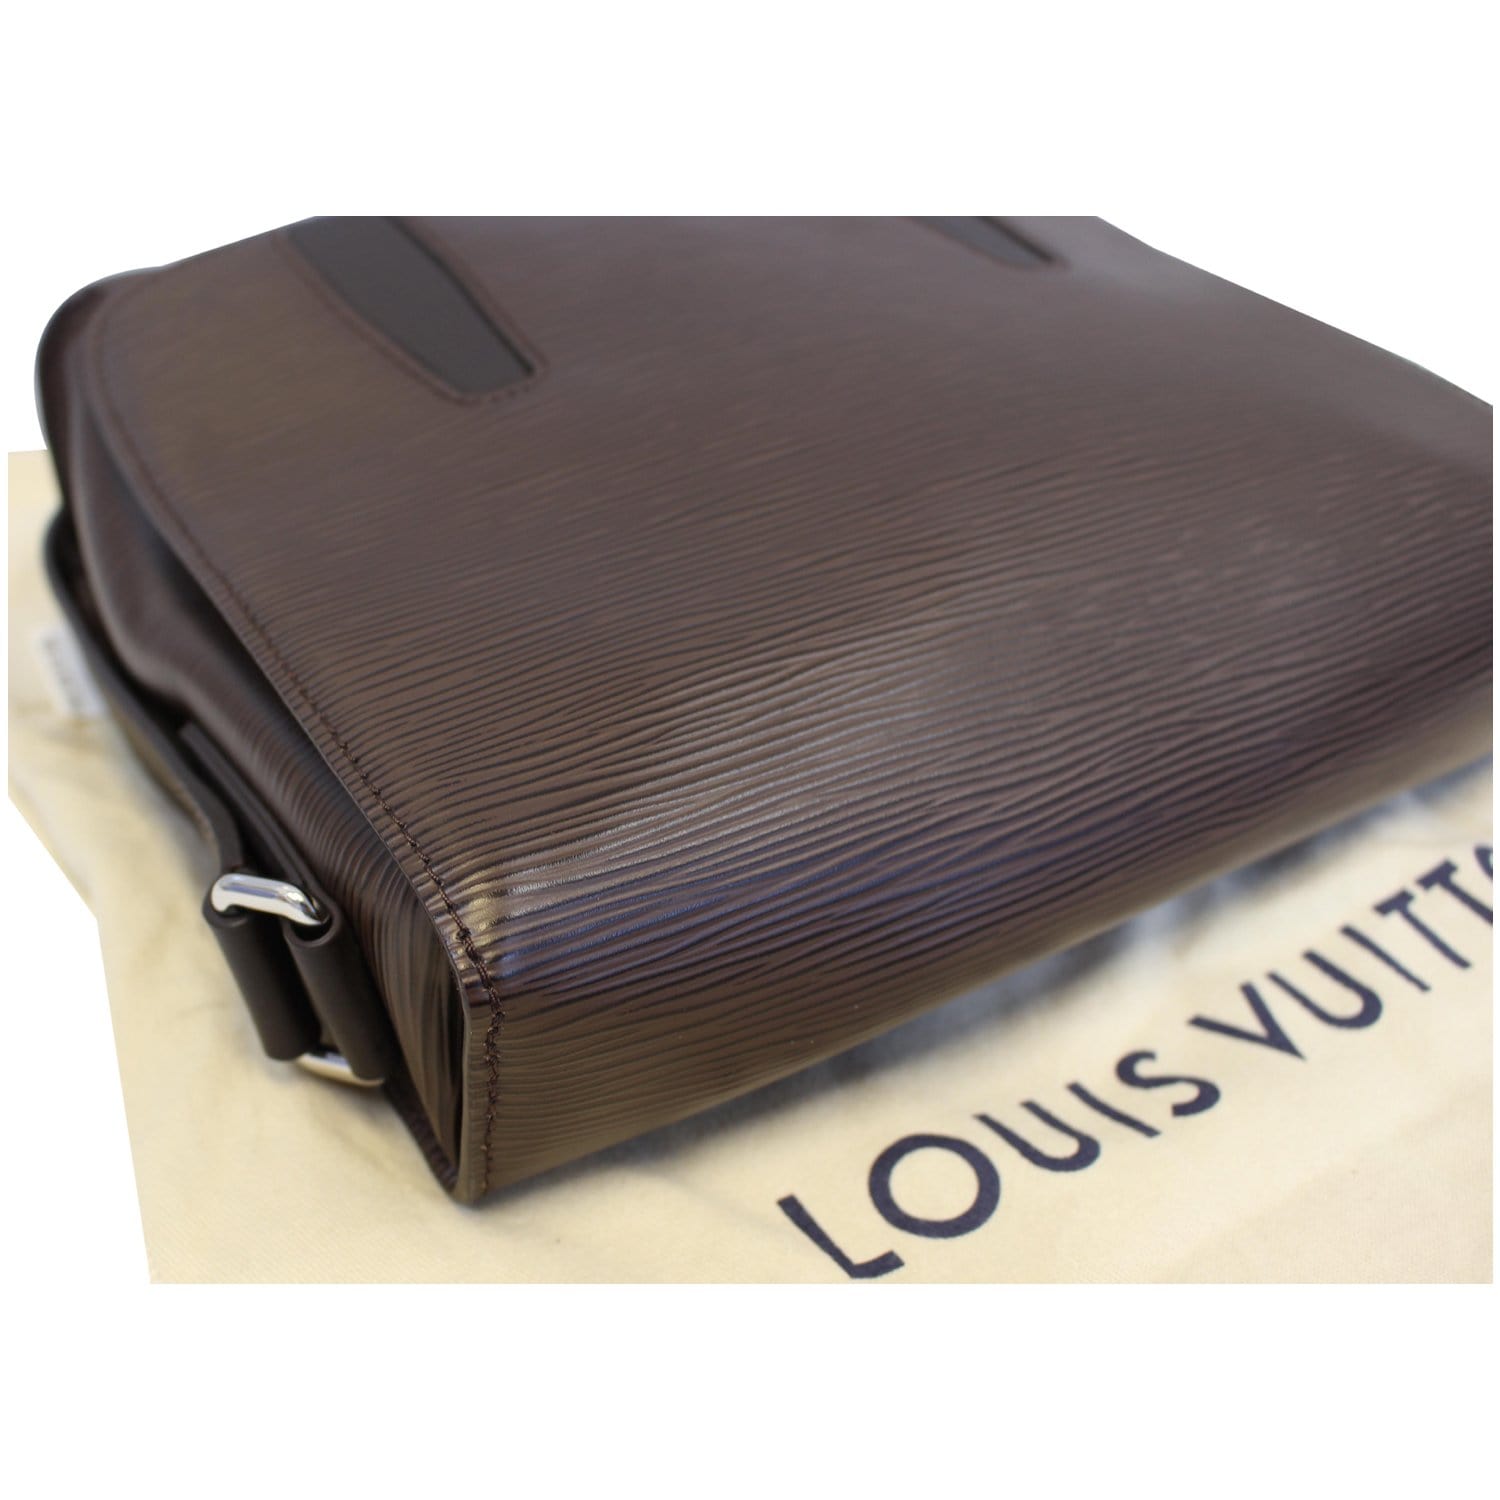 Louis Vuitton Harington PM Epi Leather Messenger Tote